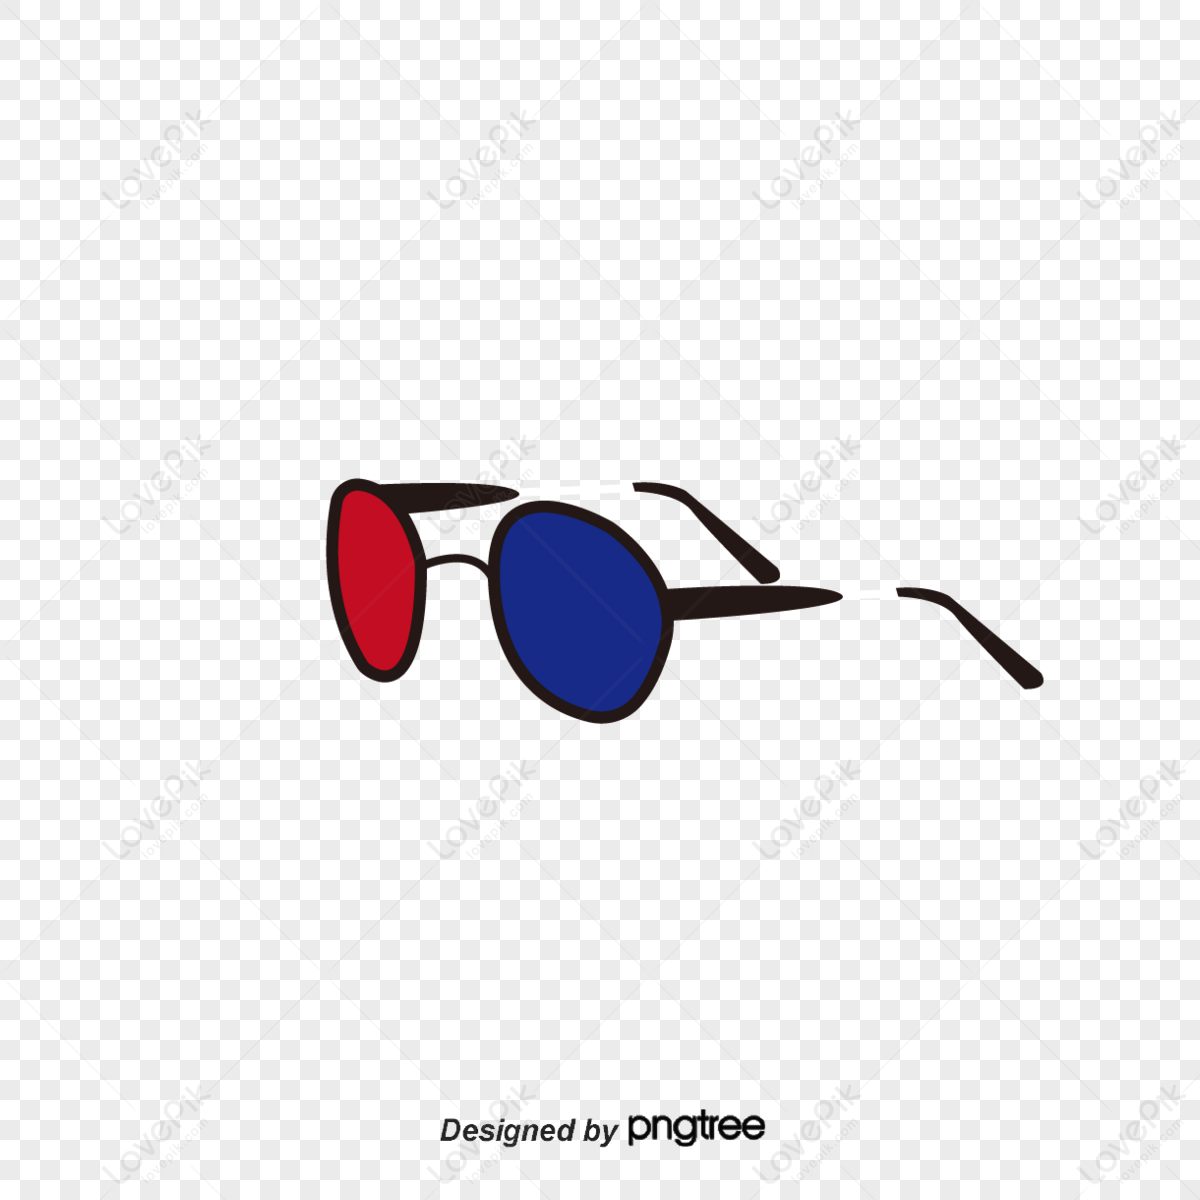 Sunglasses Clipart png download - 740*560 - Free Transparent Louis Vuitton  png Download. - CleanPNG / KissPNG